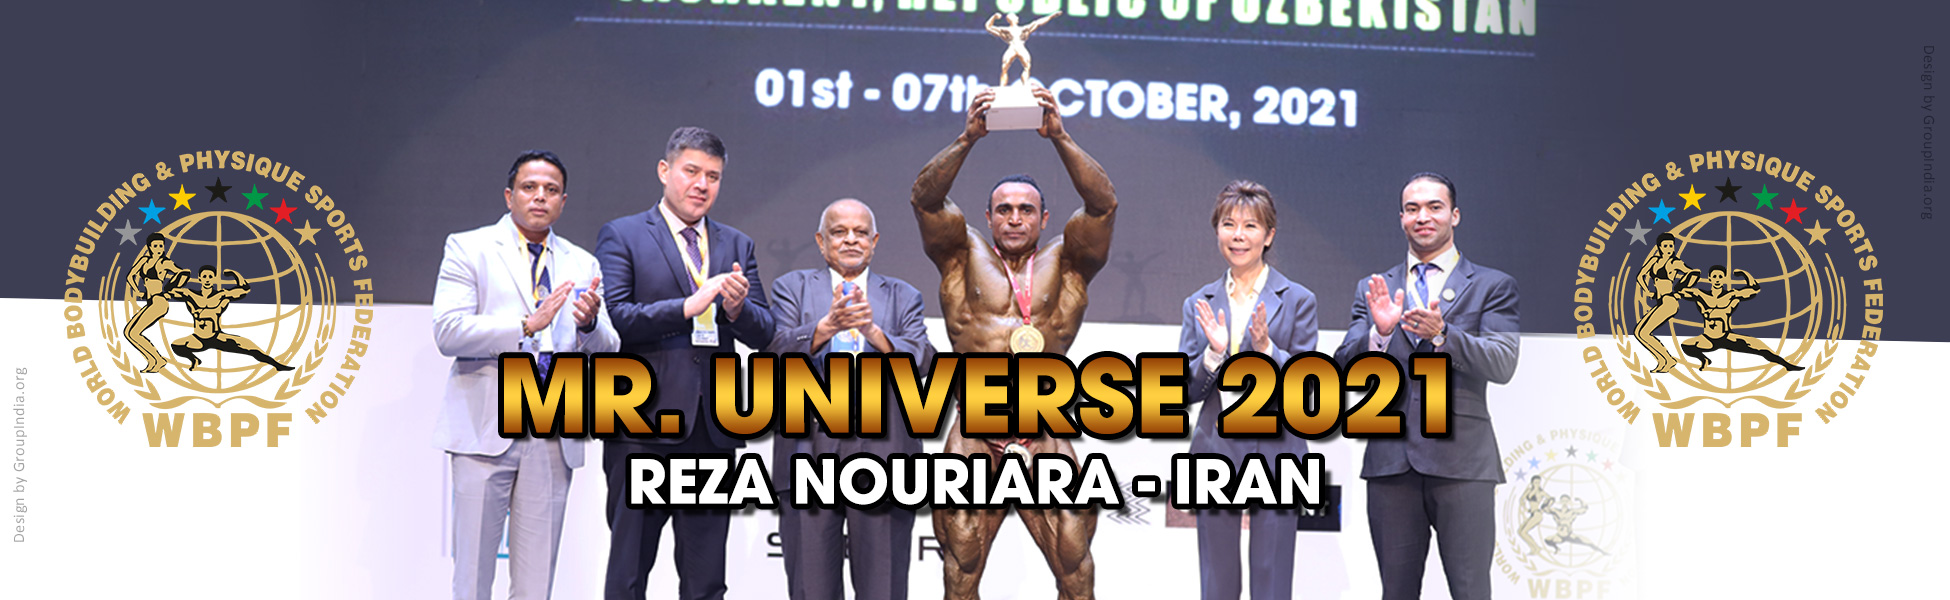 Mr.Universe 2021